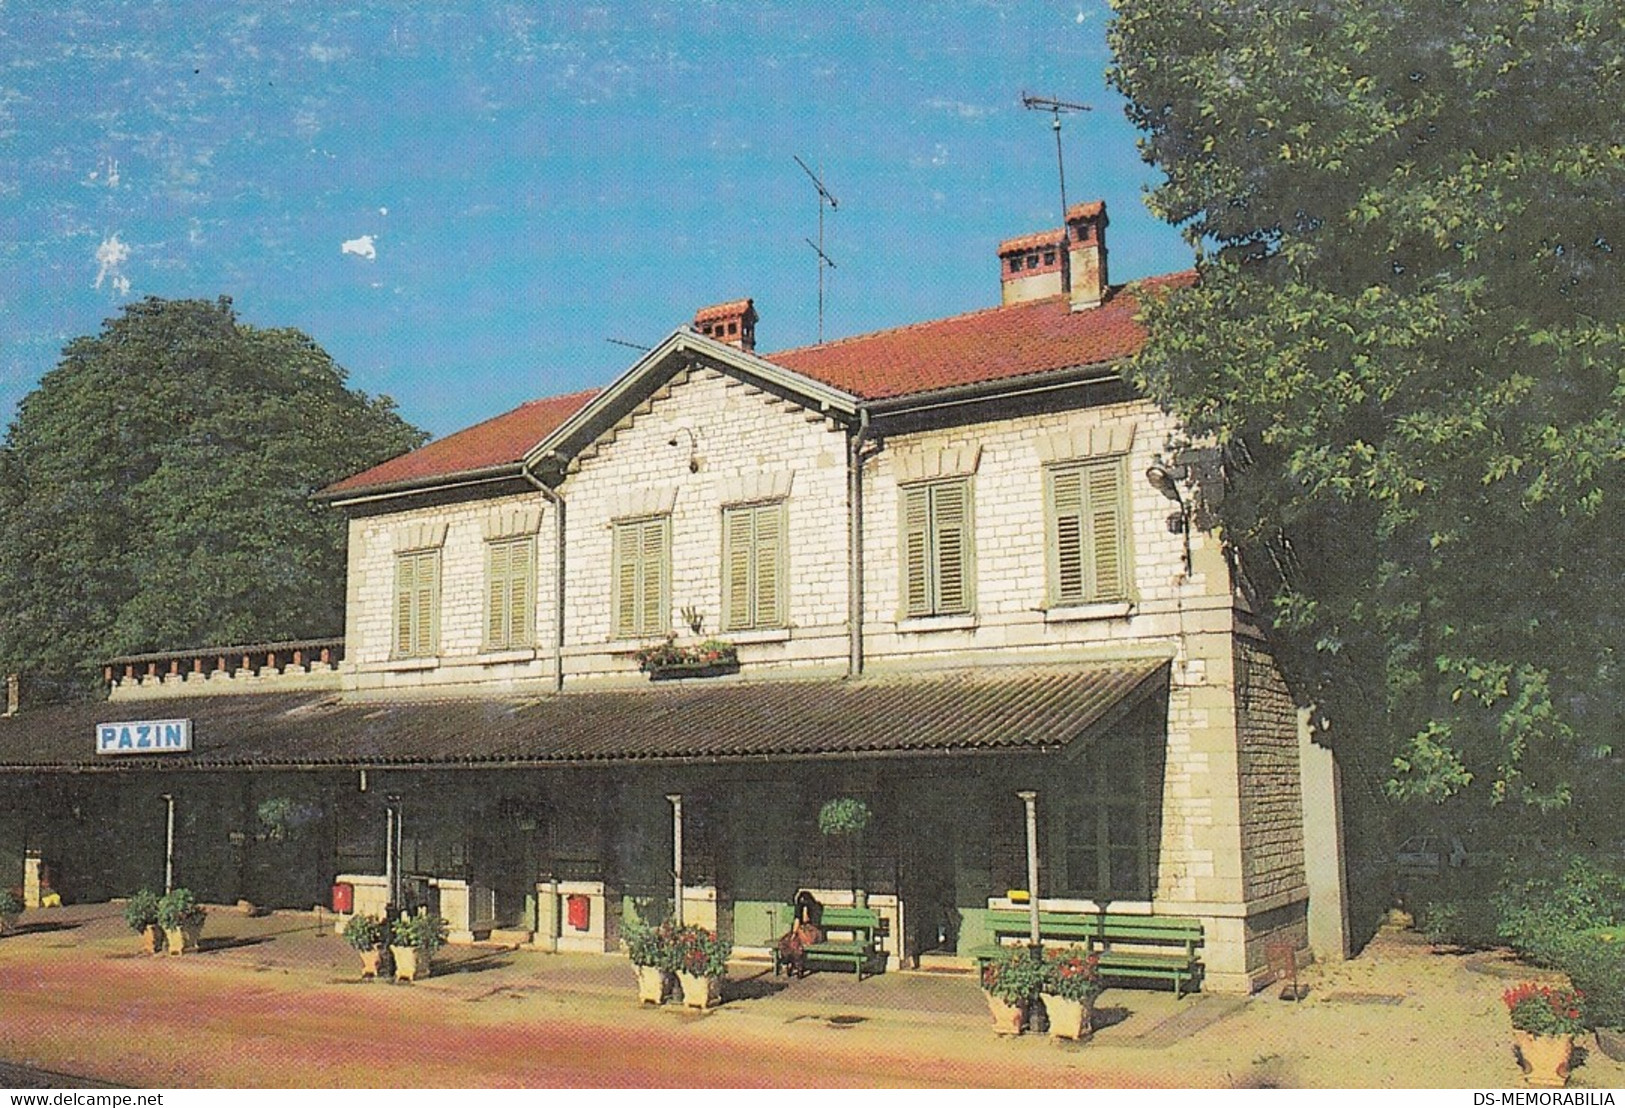 103_001 azin Istra - Railway station.jpg